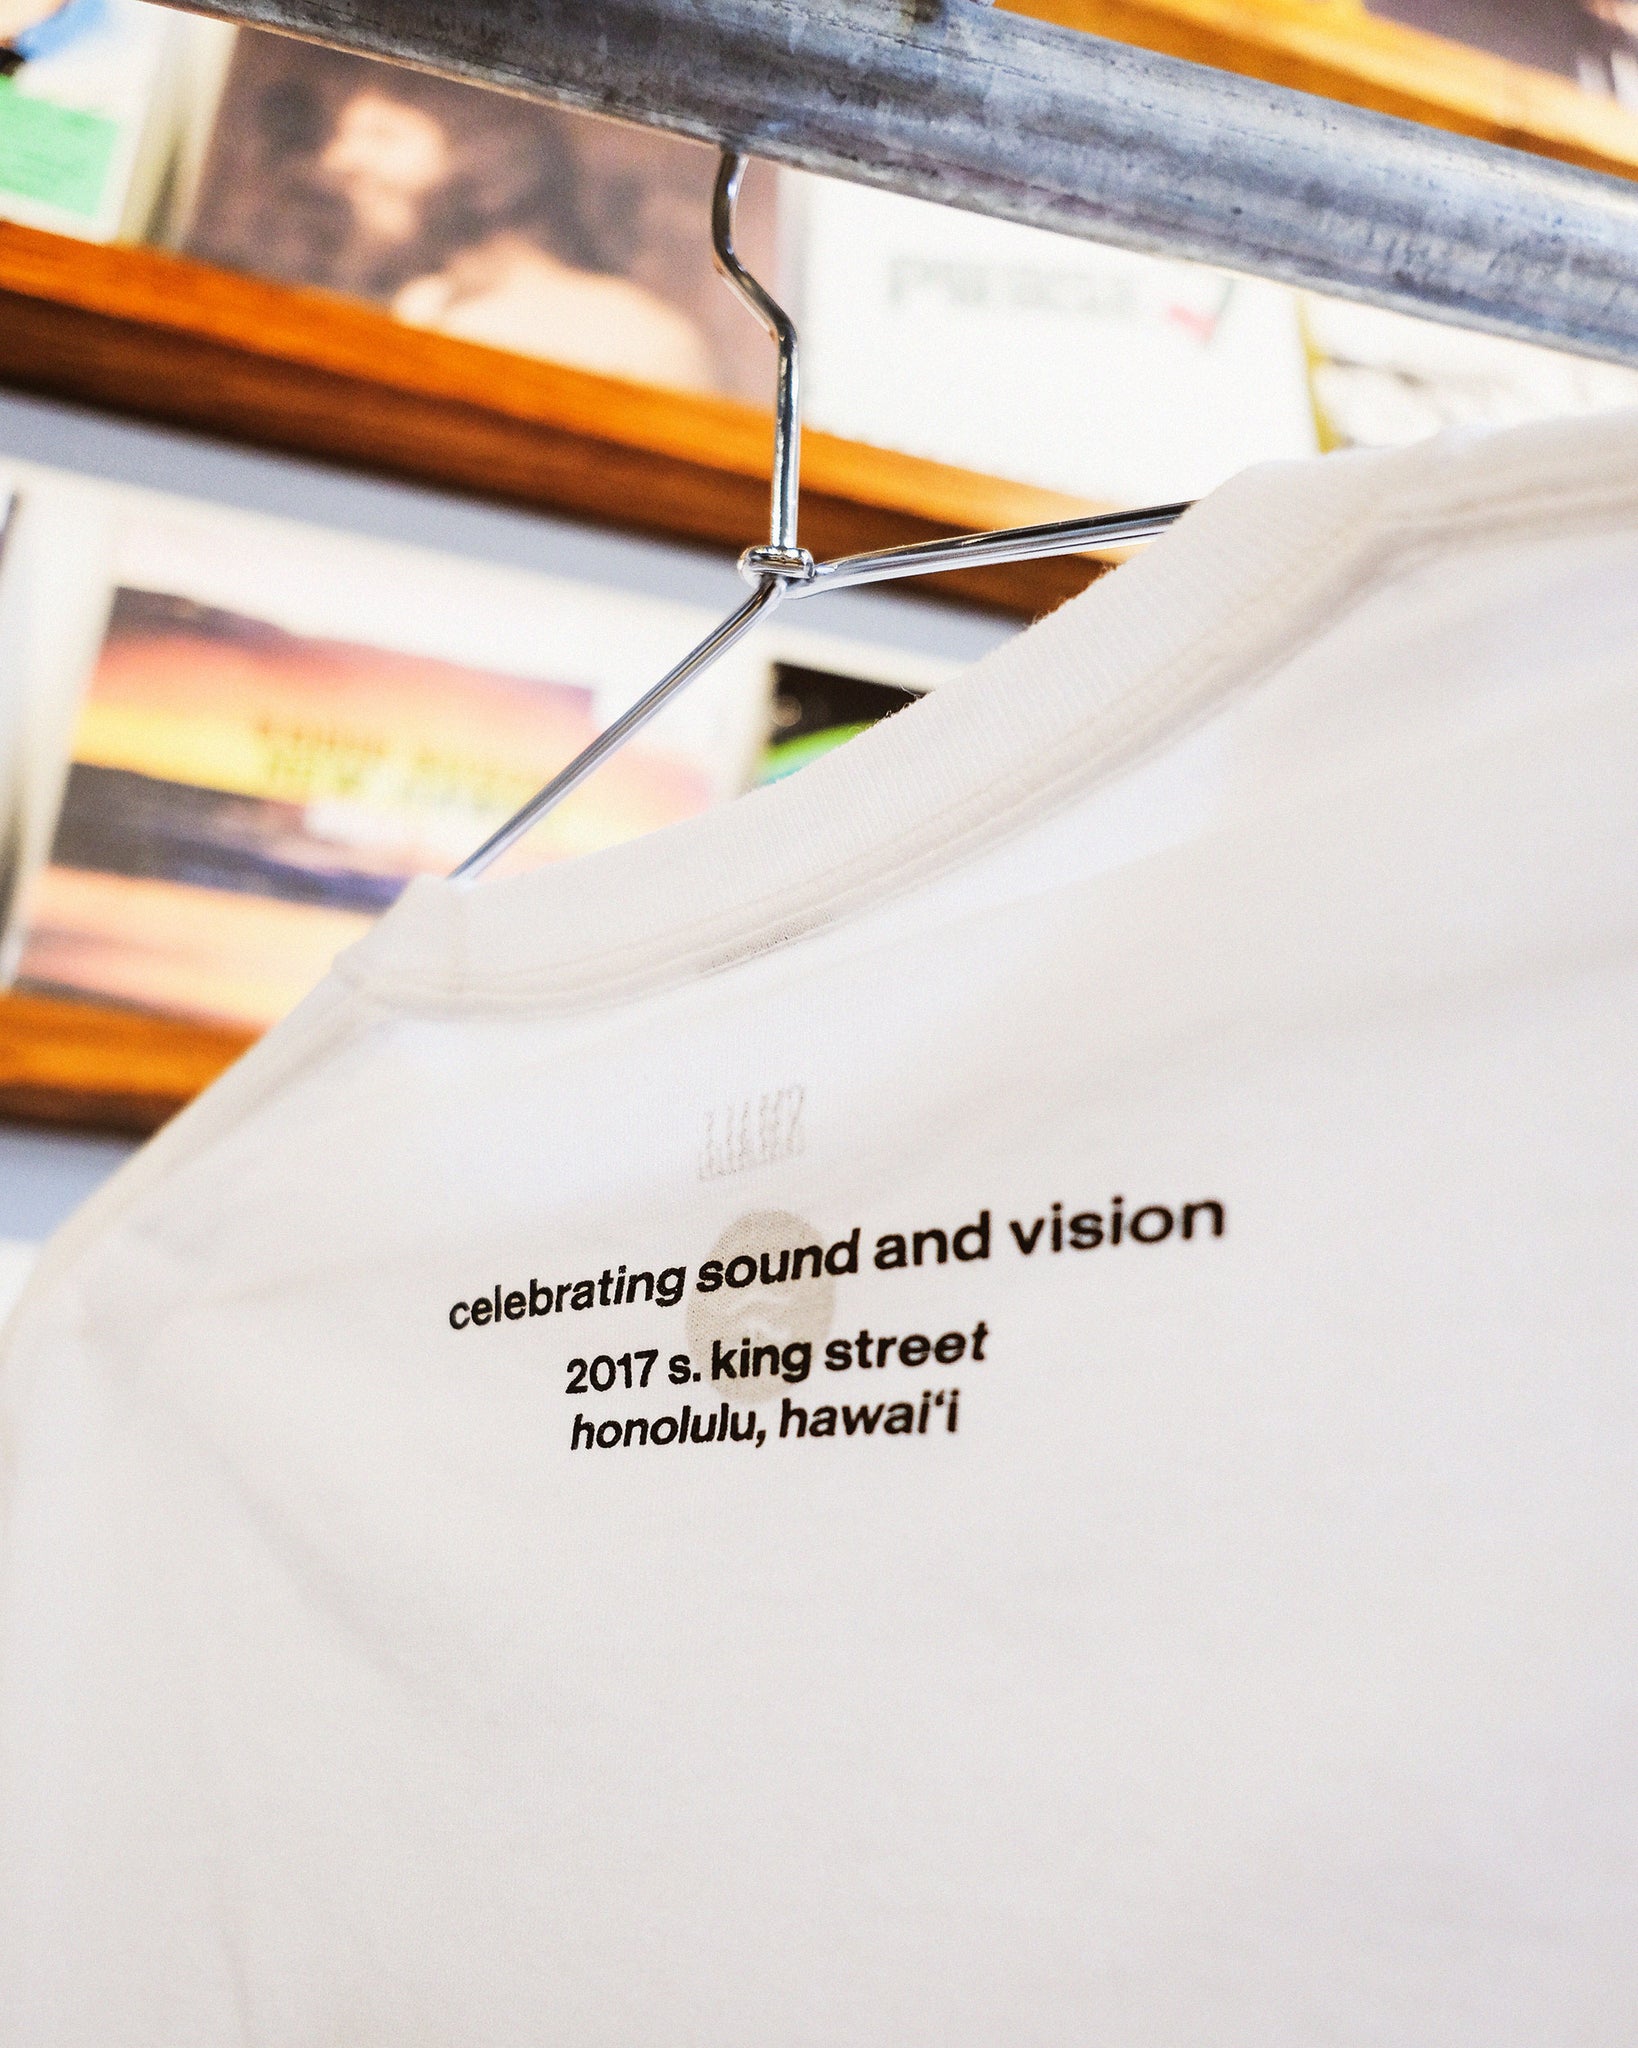 Sound Vision Long Sleeve Shirt (White)